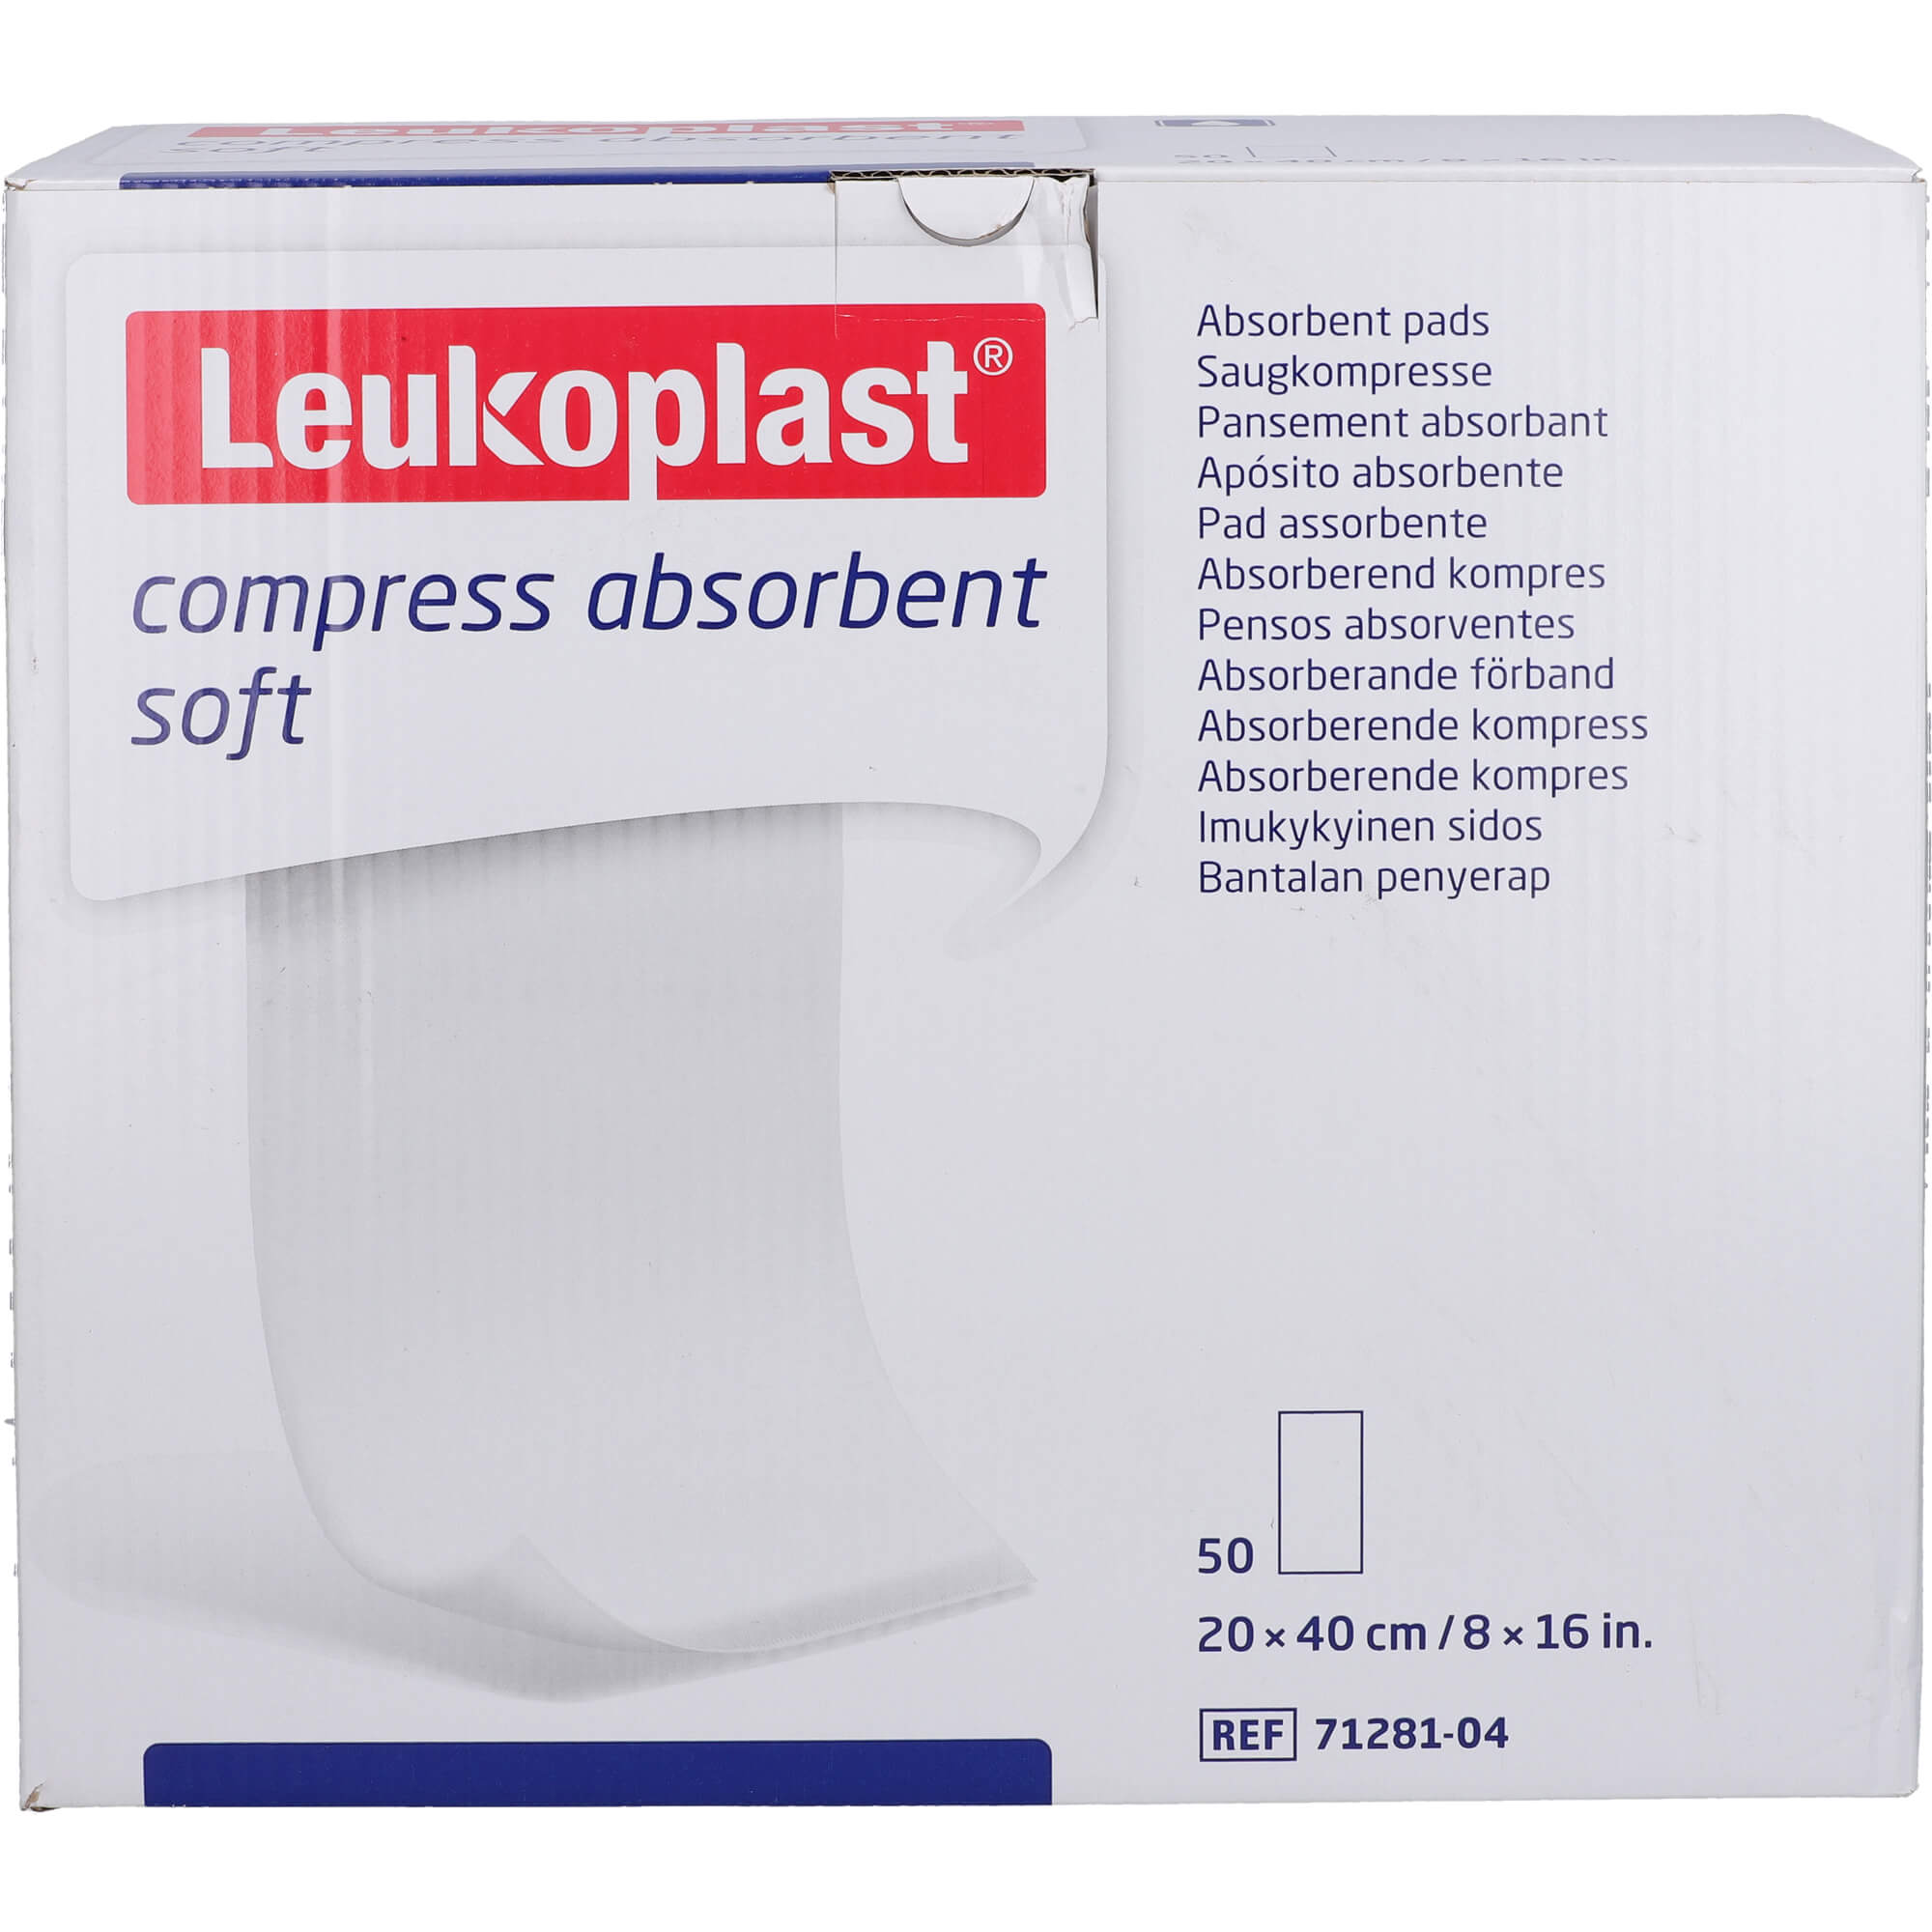 LEUKOPLAST compress absorbent soft unste.20x40cm